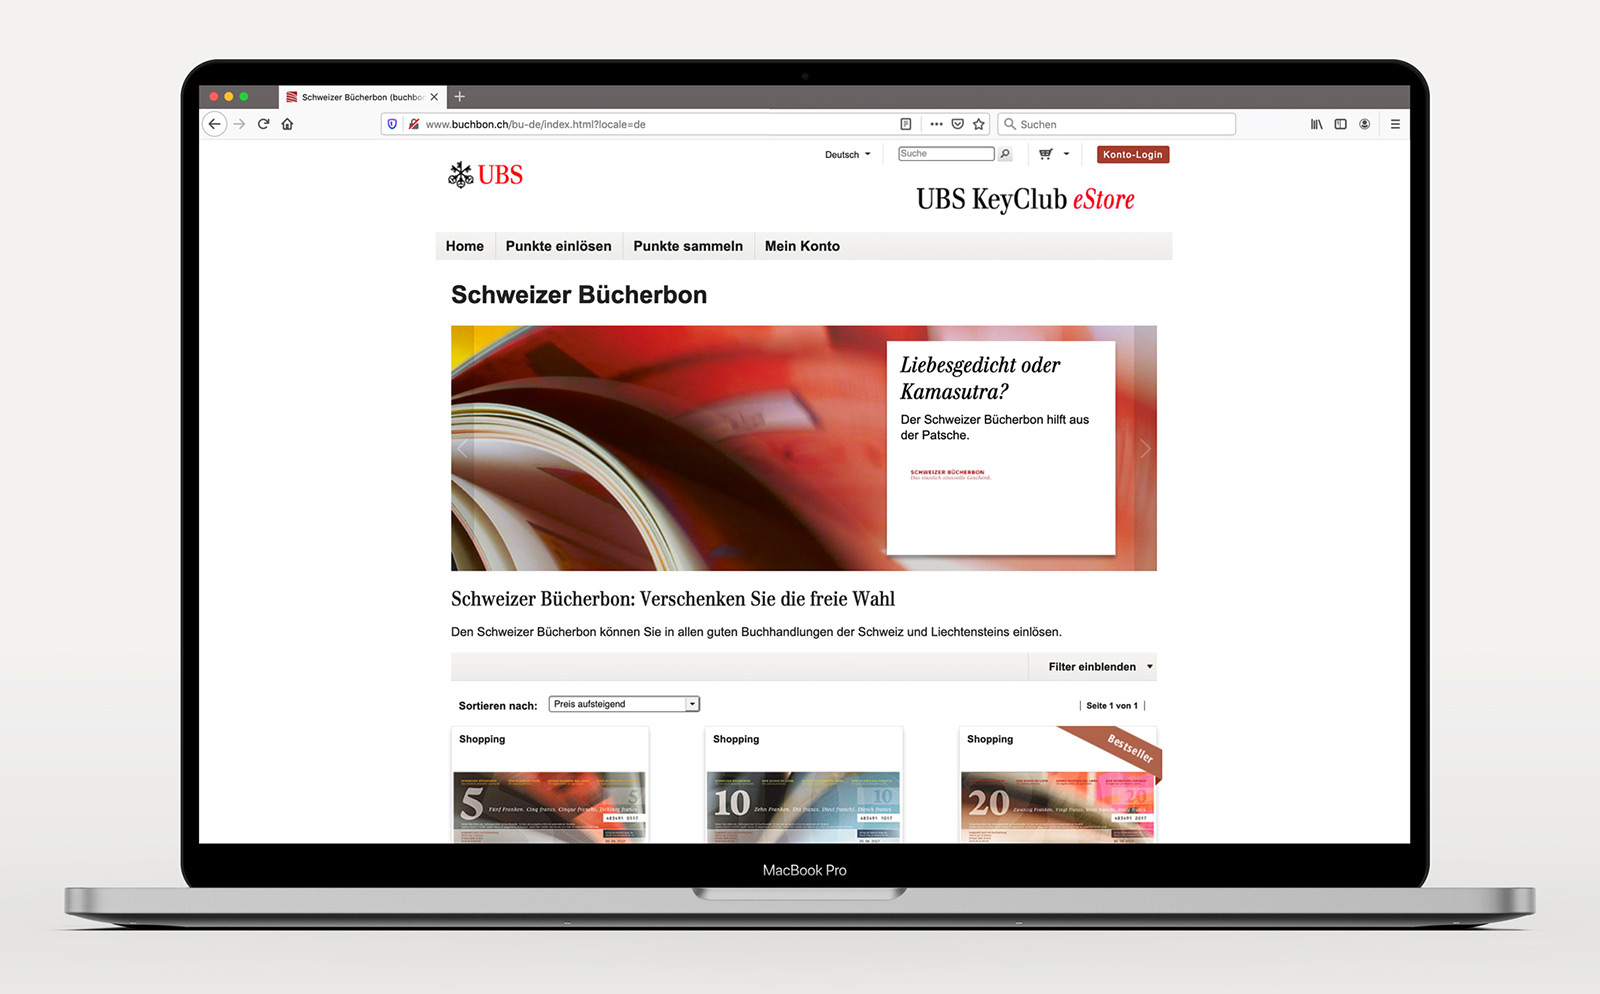 Marketing UBS Keyclub Schweizer Bücherbon